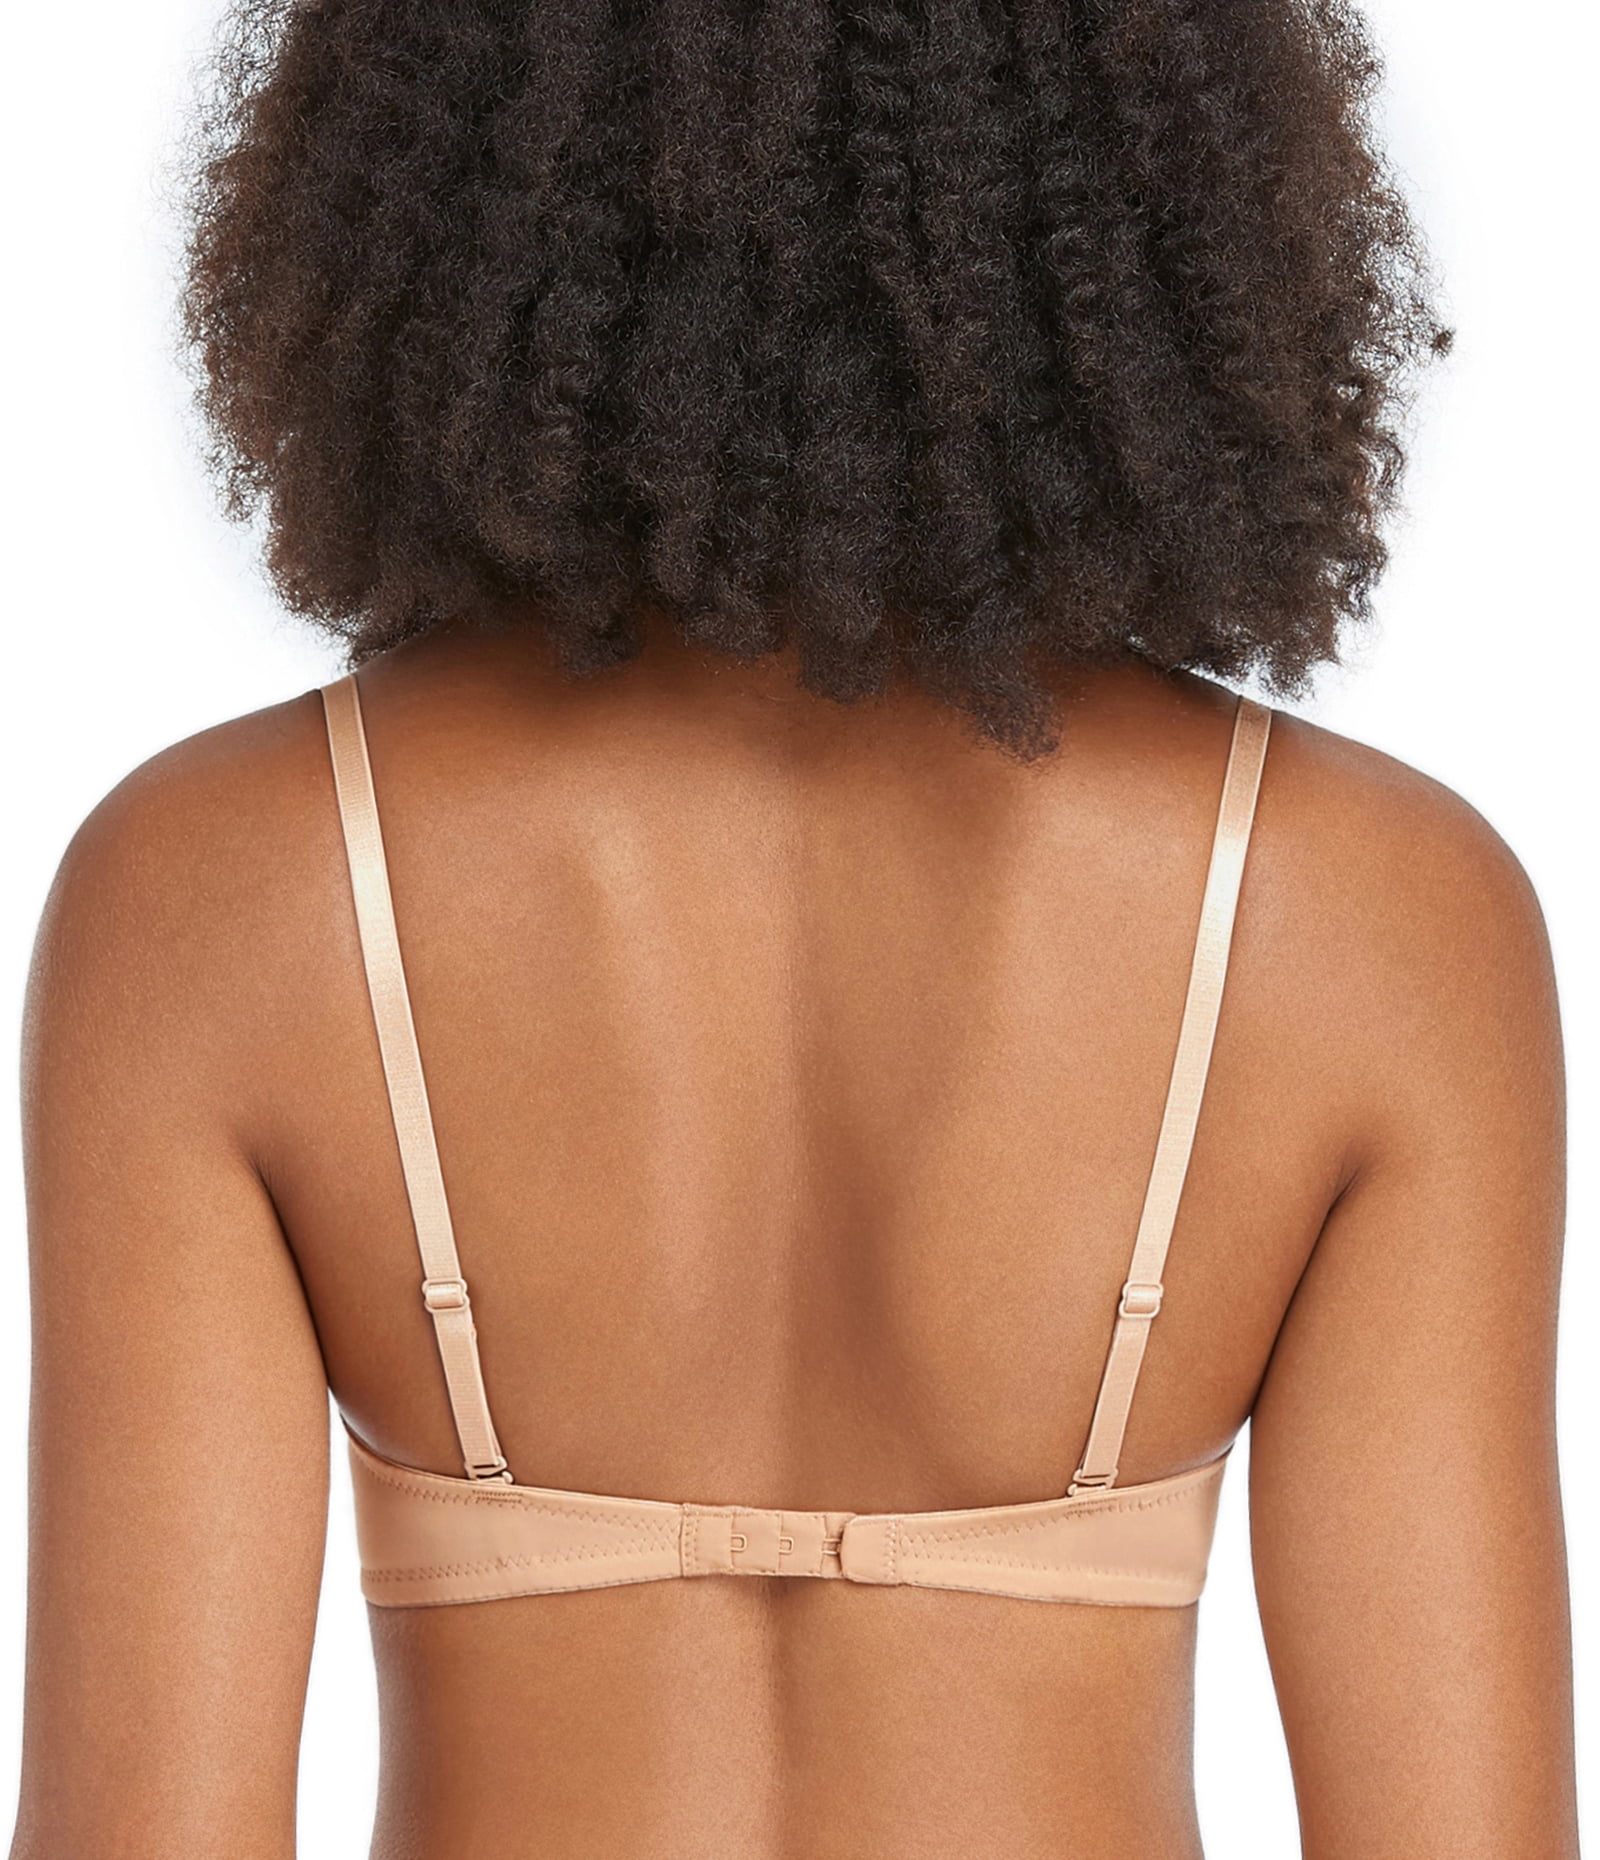 Wekofi Deep V Plunge Bras for Women Convertible Sexy Low Back